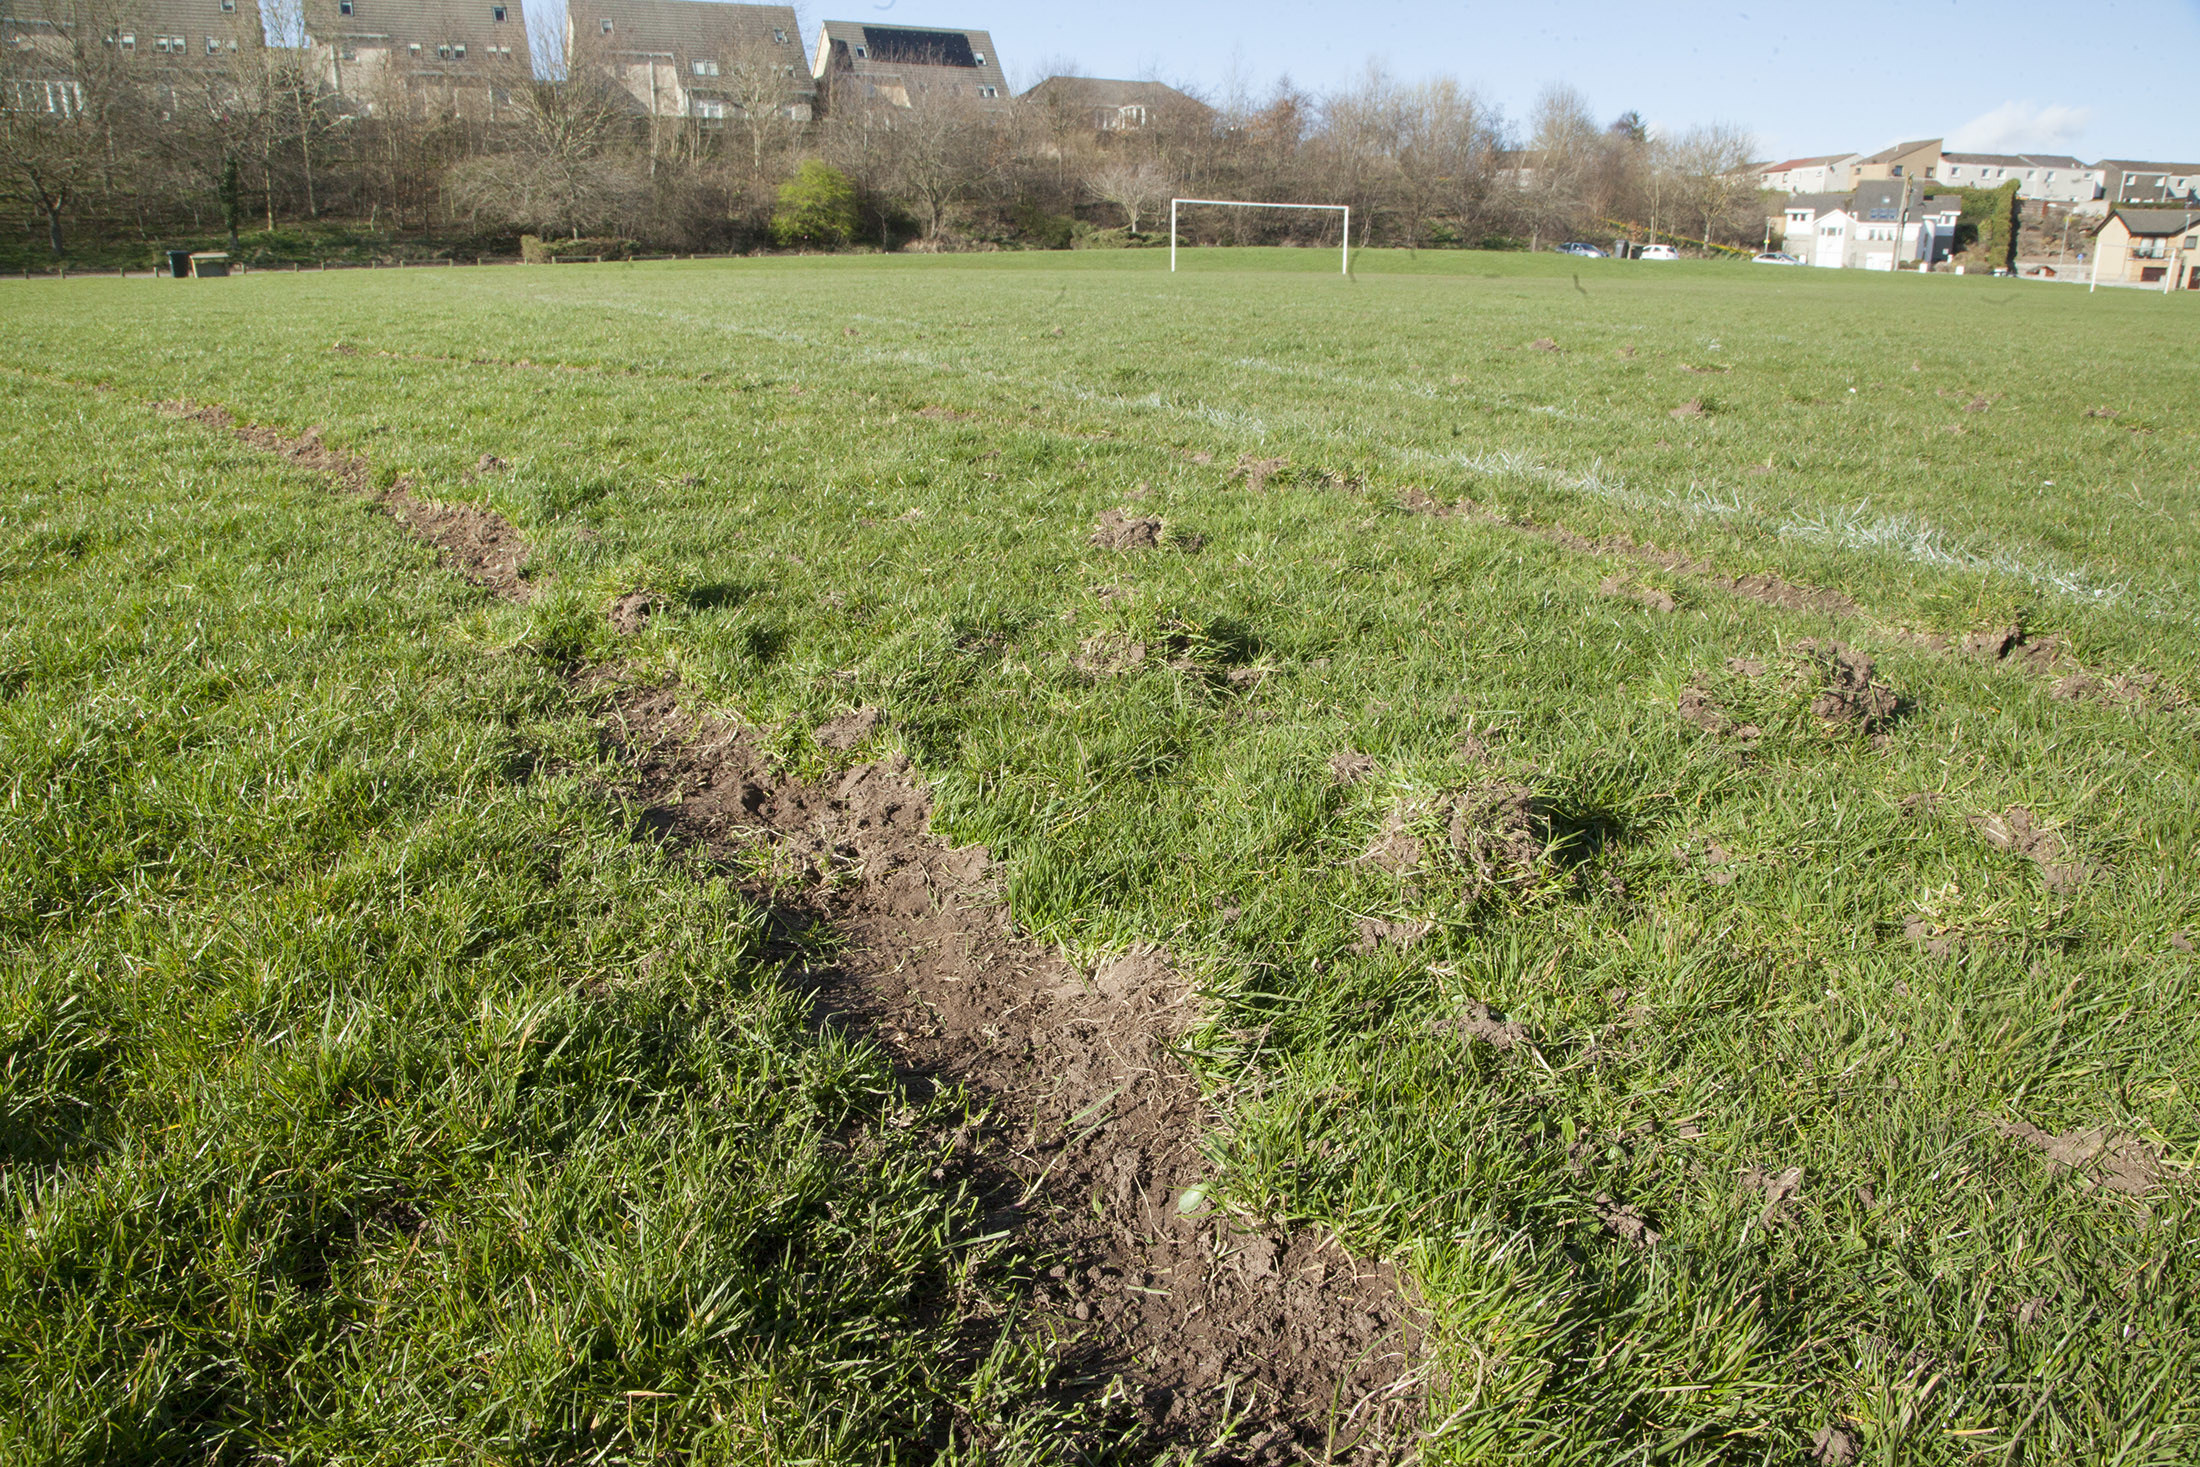 The damaged pitch.